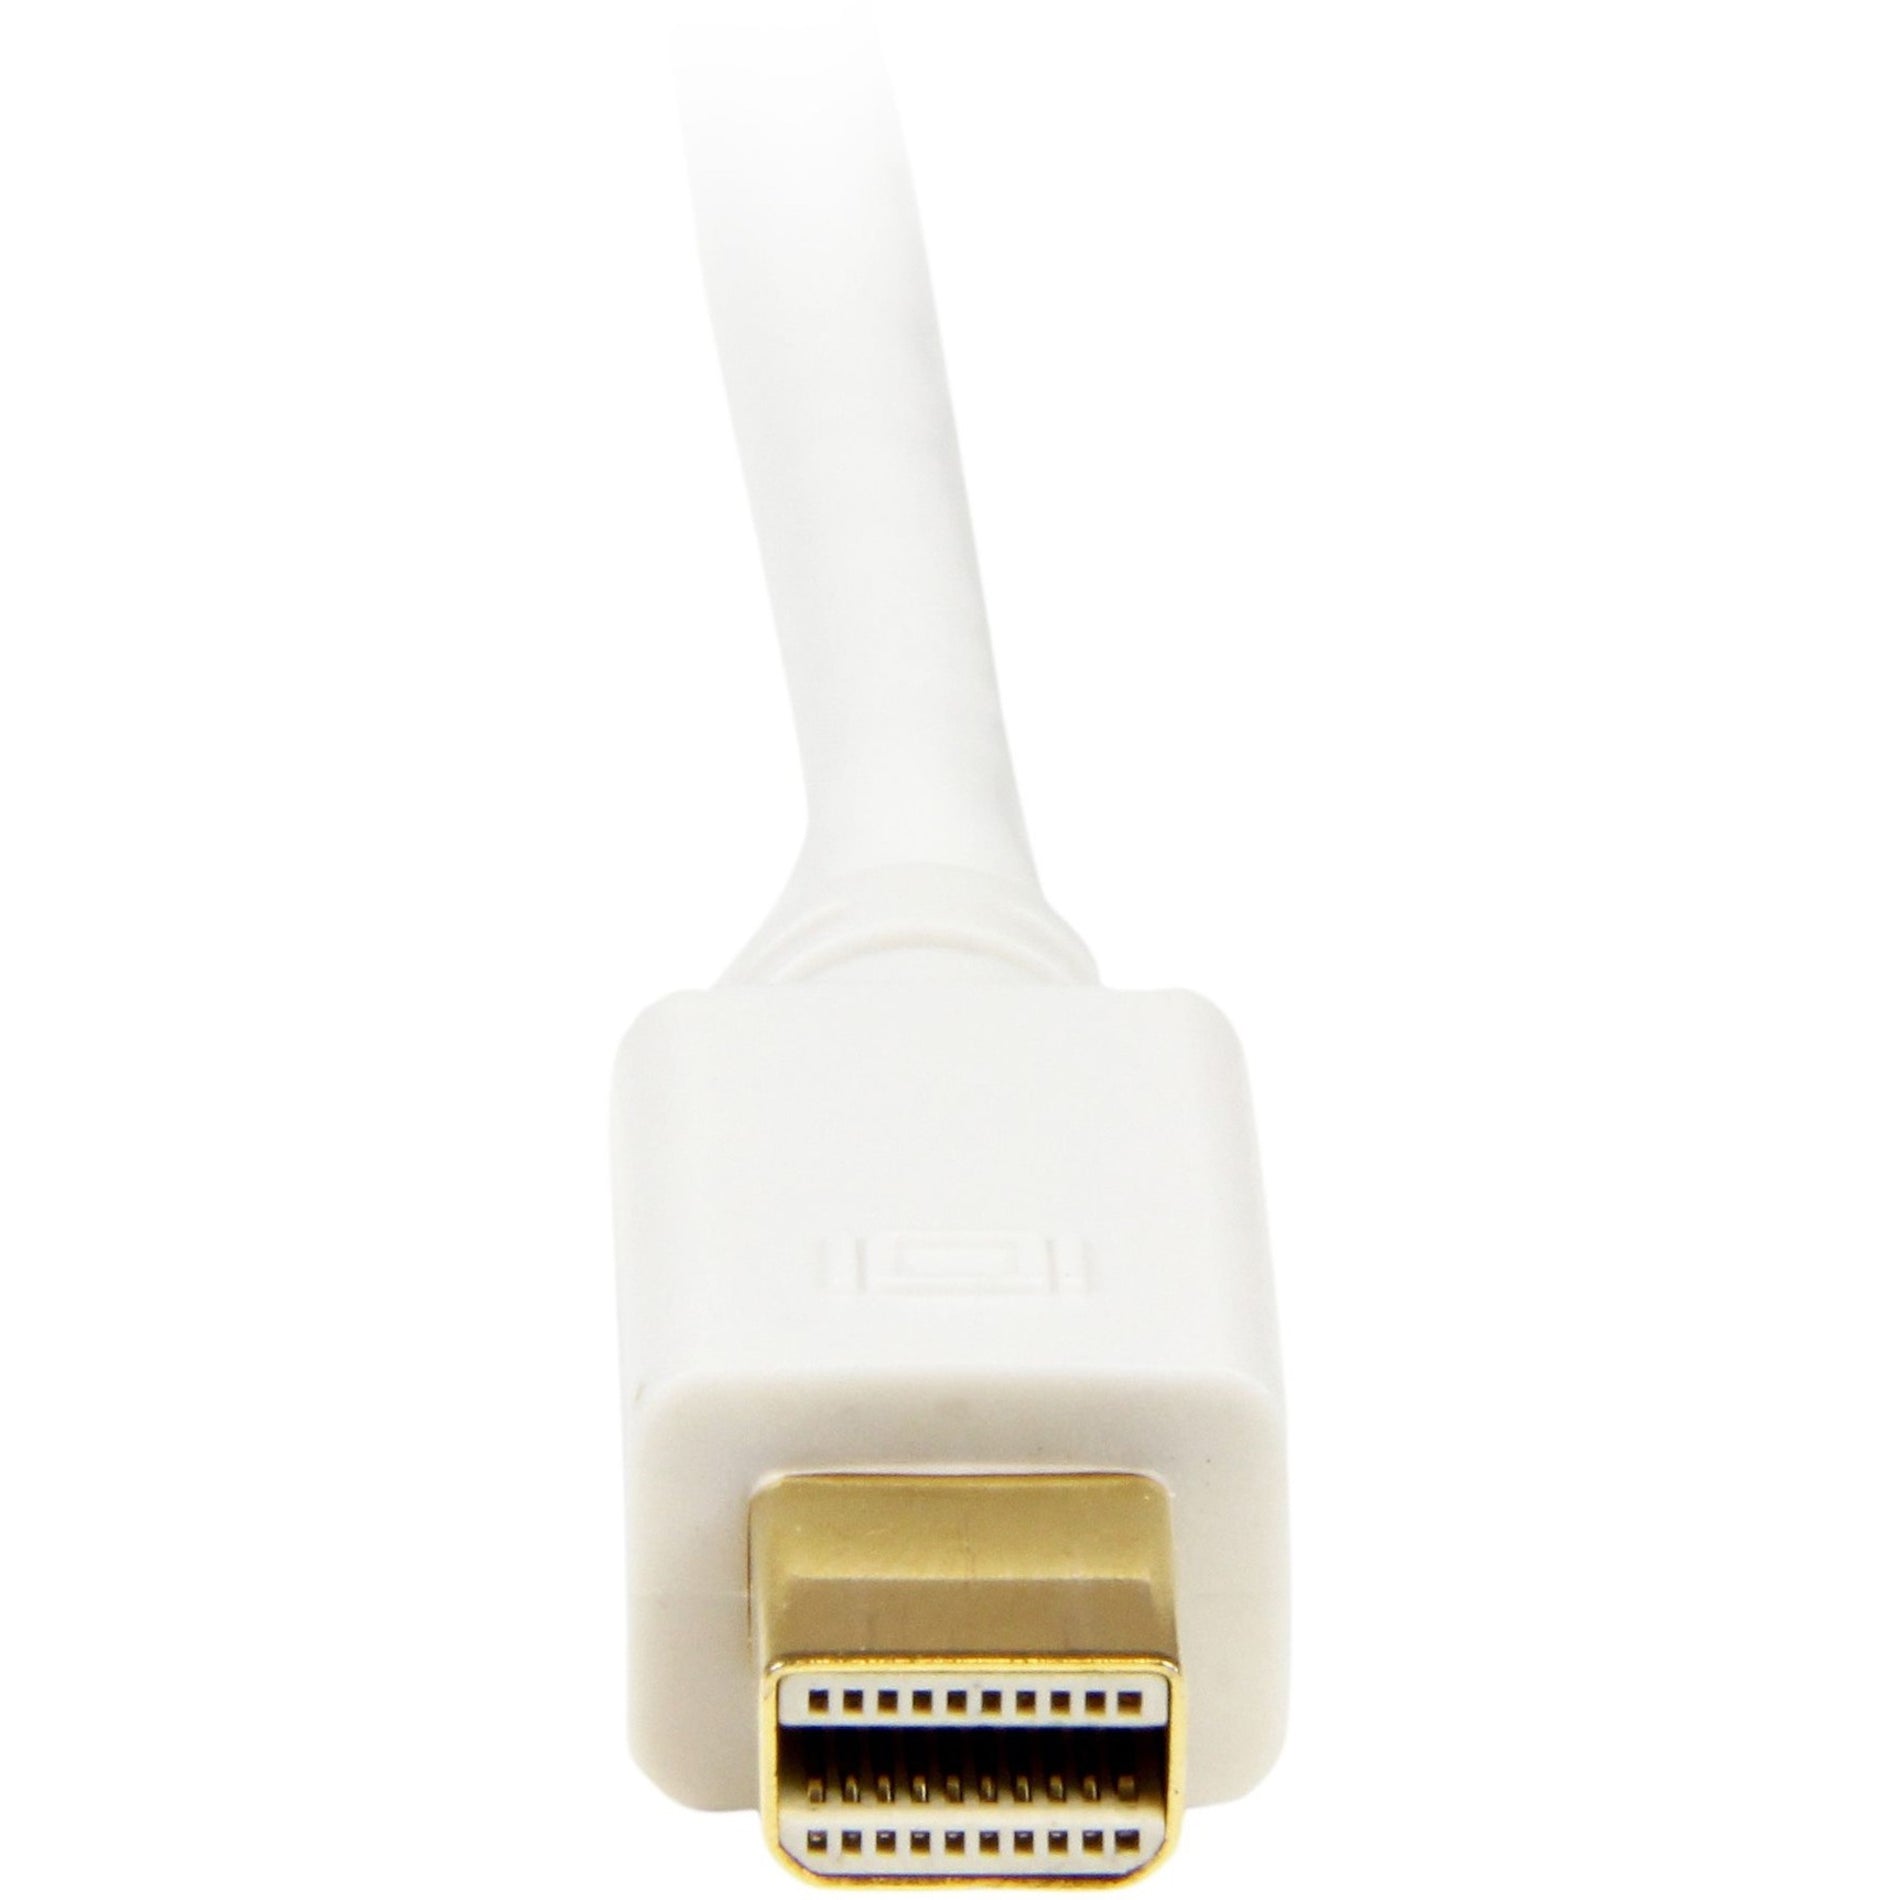 StarTech.com MDP2DVIMM10W Mini DisplayPort to DVI Cable - 10 ft, 1920x1200